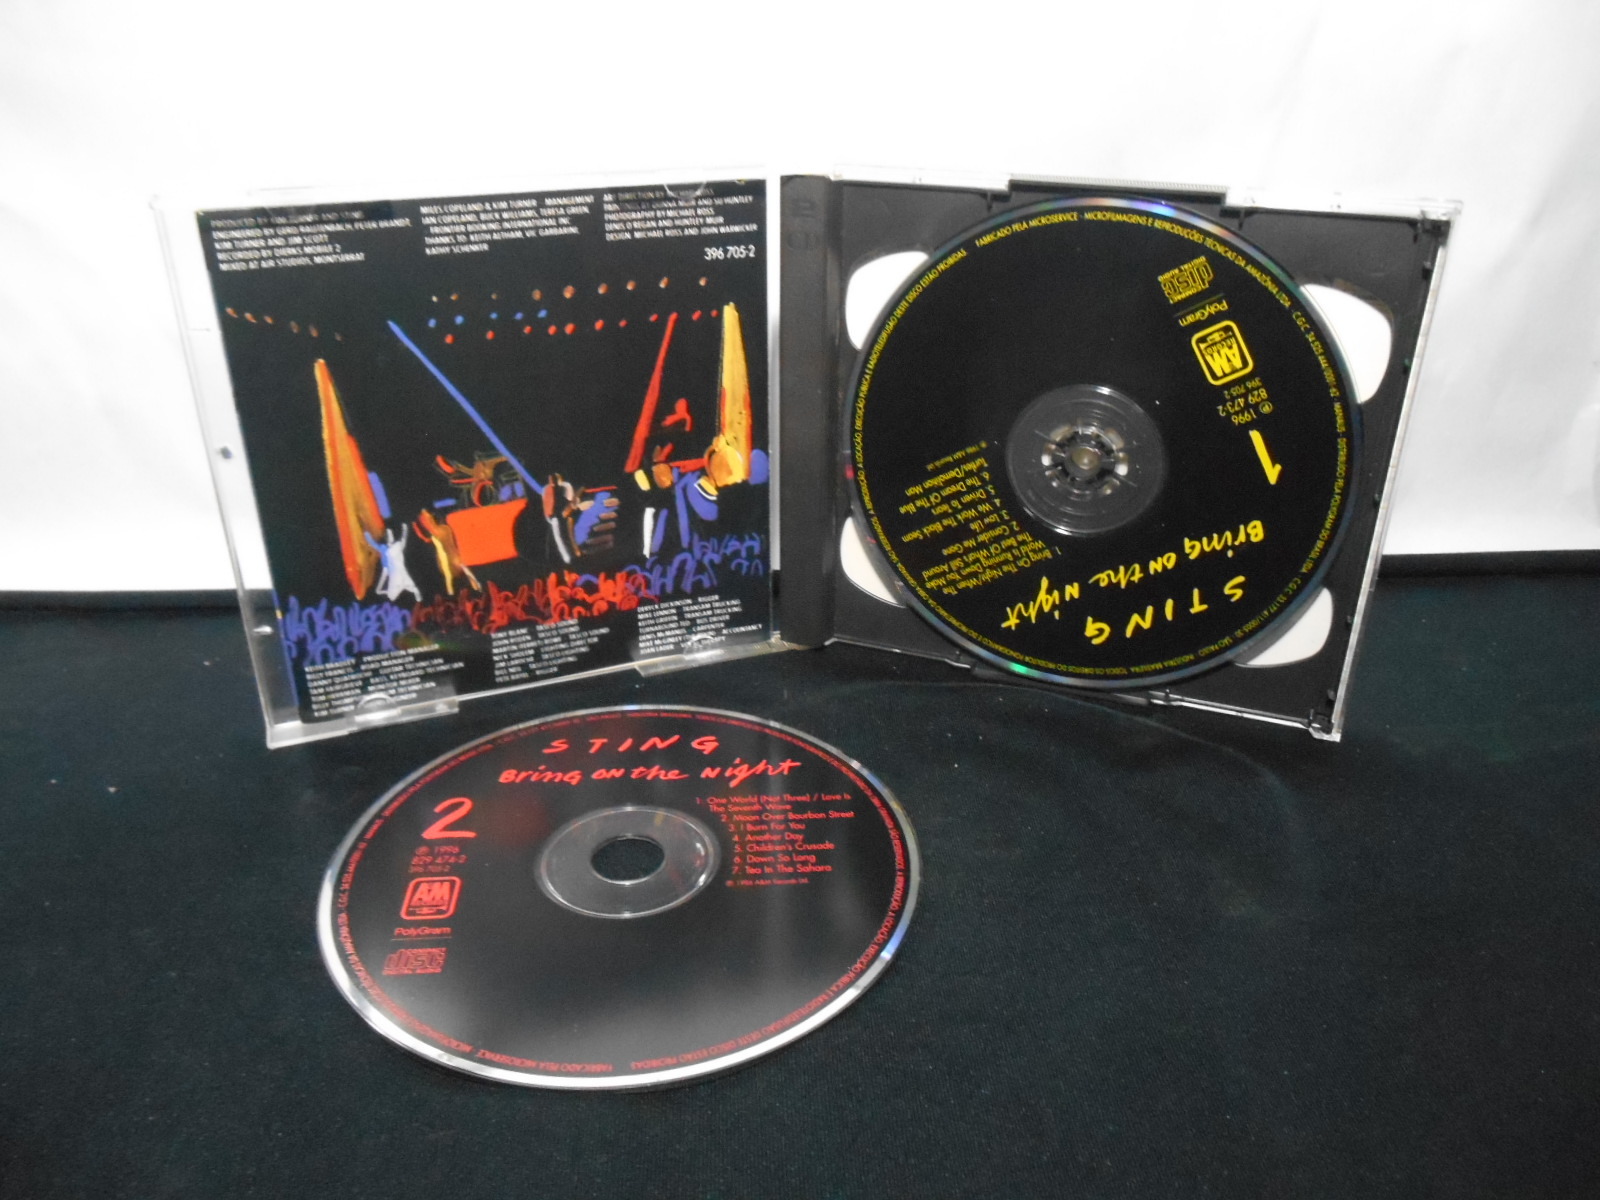 CD - Sting - Bring On the Night (Duplo)